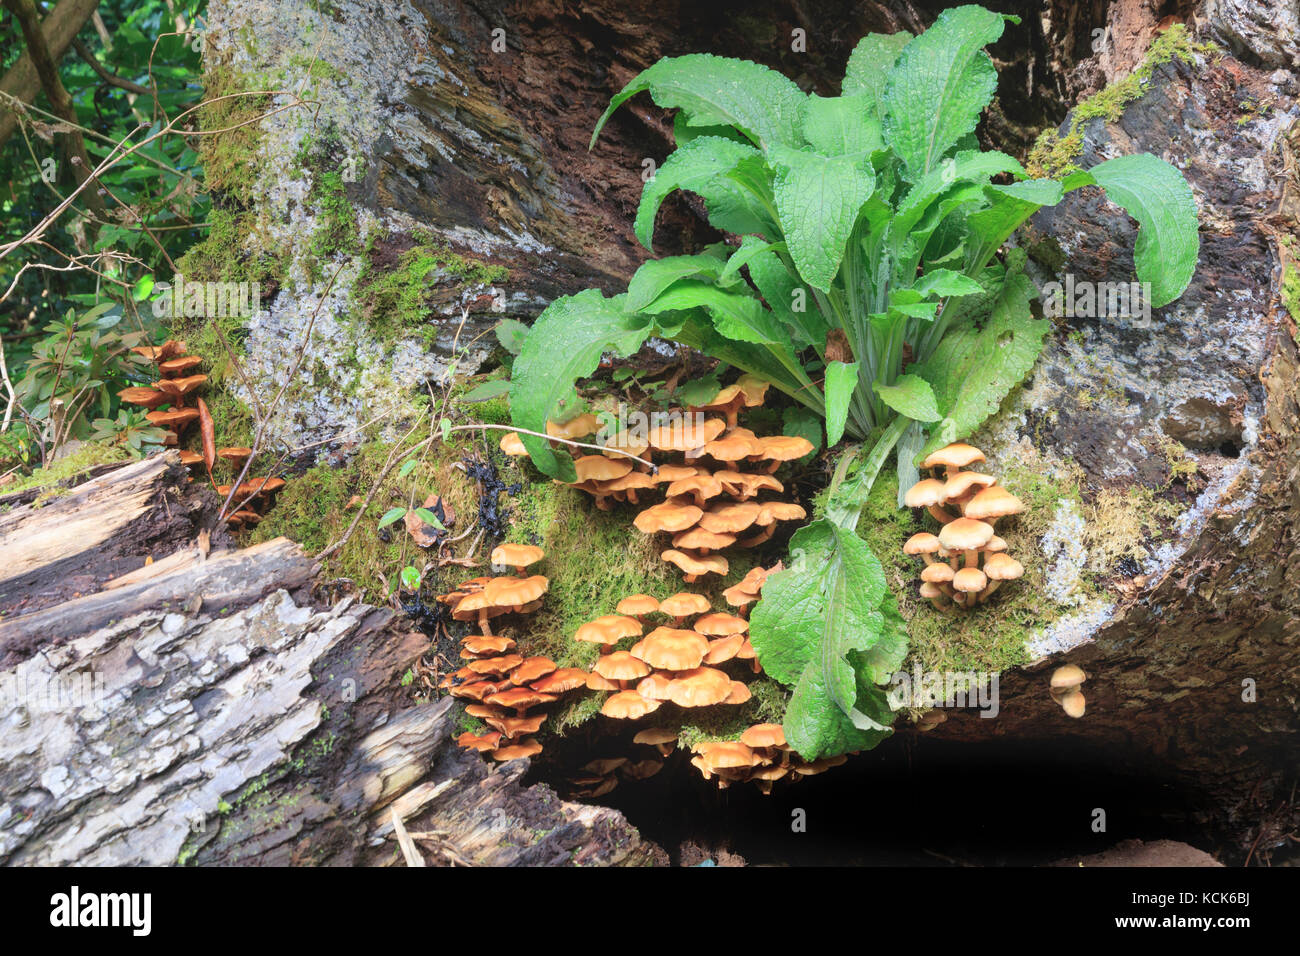 Ummanteltes woodtuft Pilz, Kuehneromyces mutabilis, aus einem alten Hartholz anmelden. Rosette Digitalis purpurea oben. Stockfoto